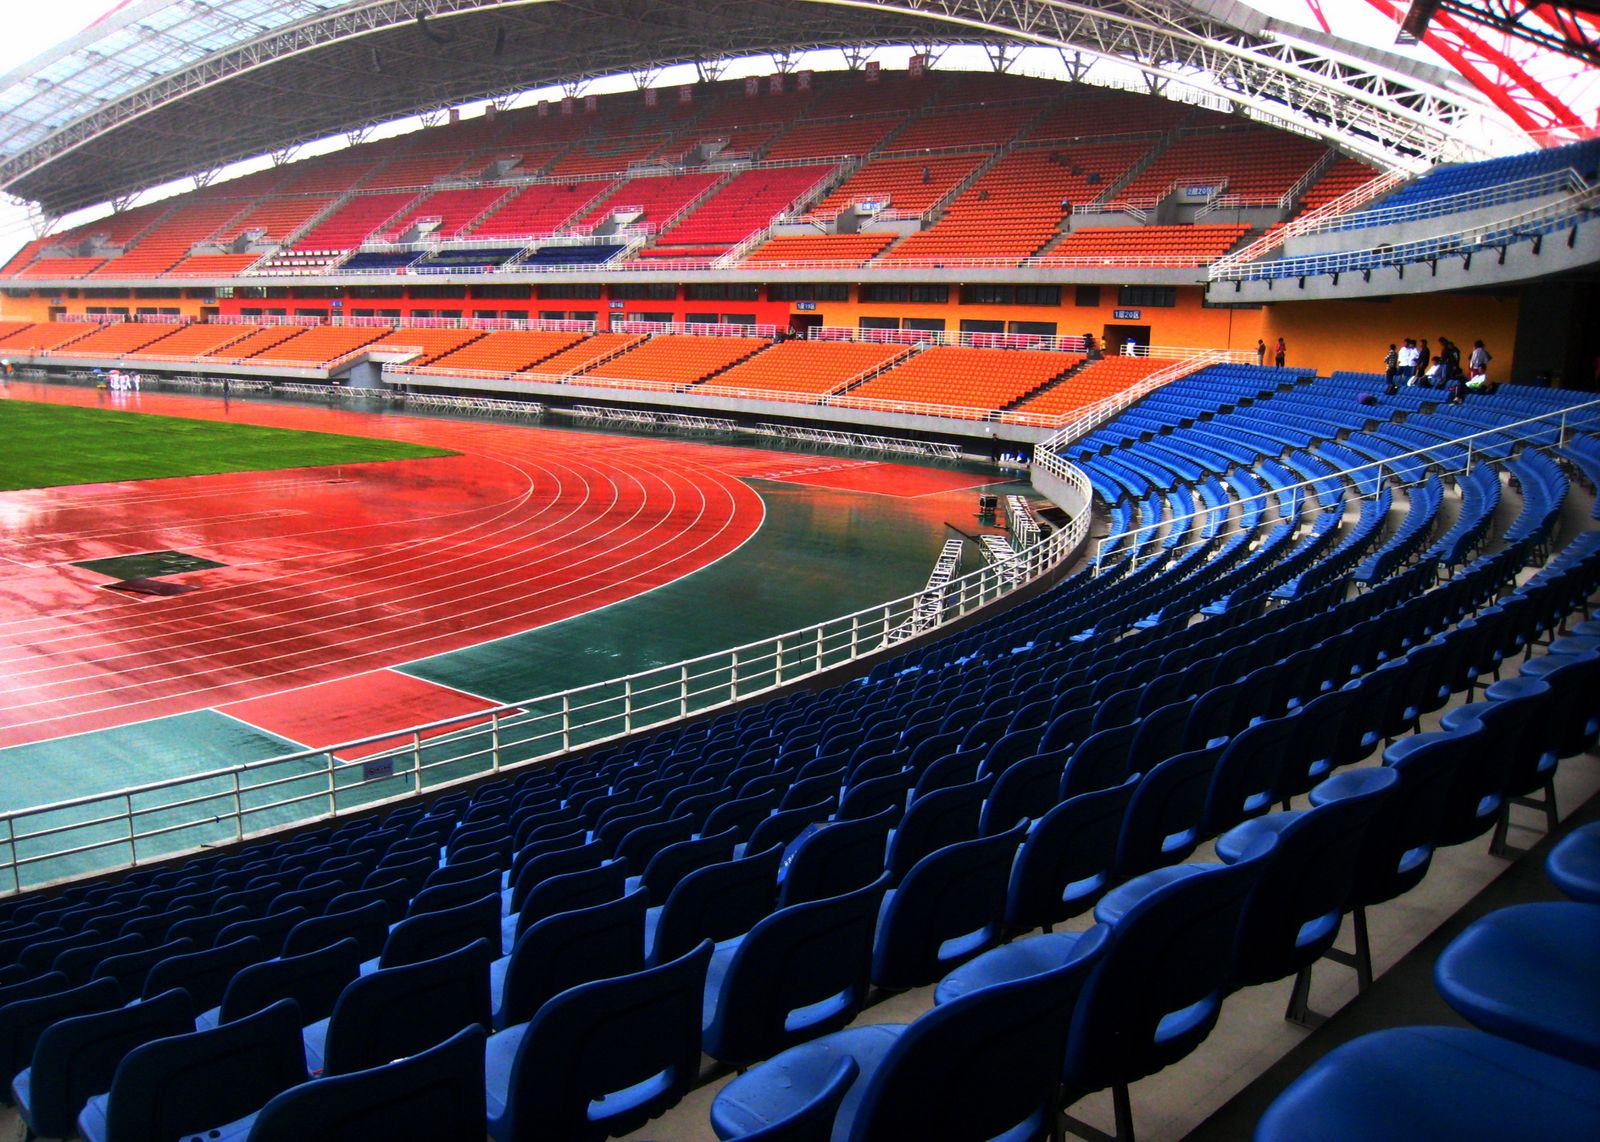 Zibo Sports Center Stadium: 1142x1600px, 363 kB. ©. 